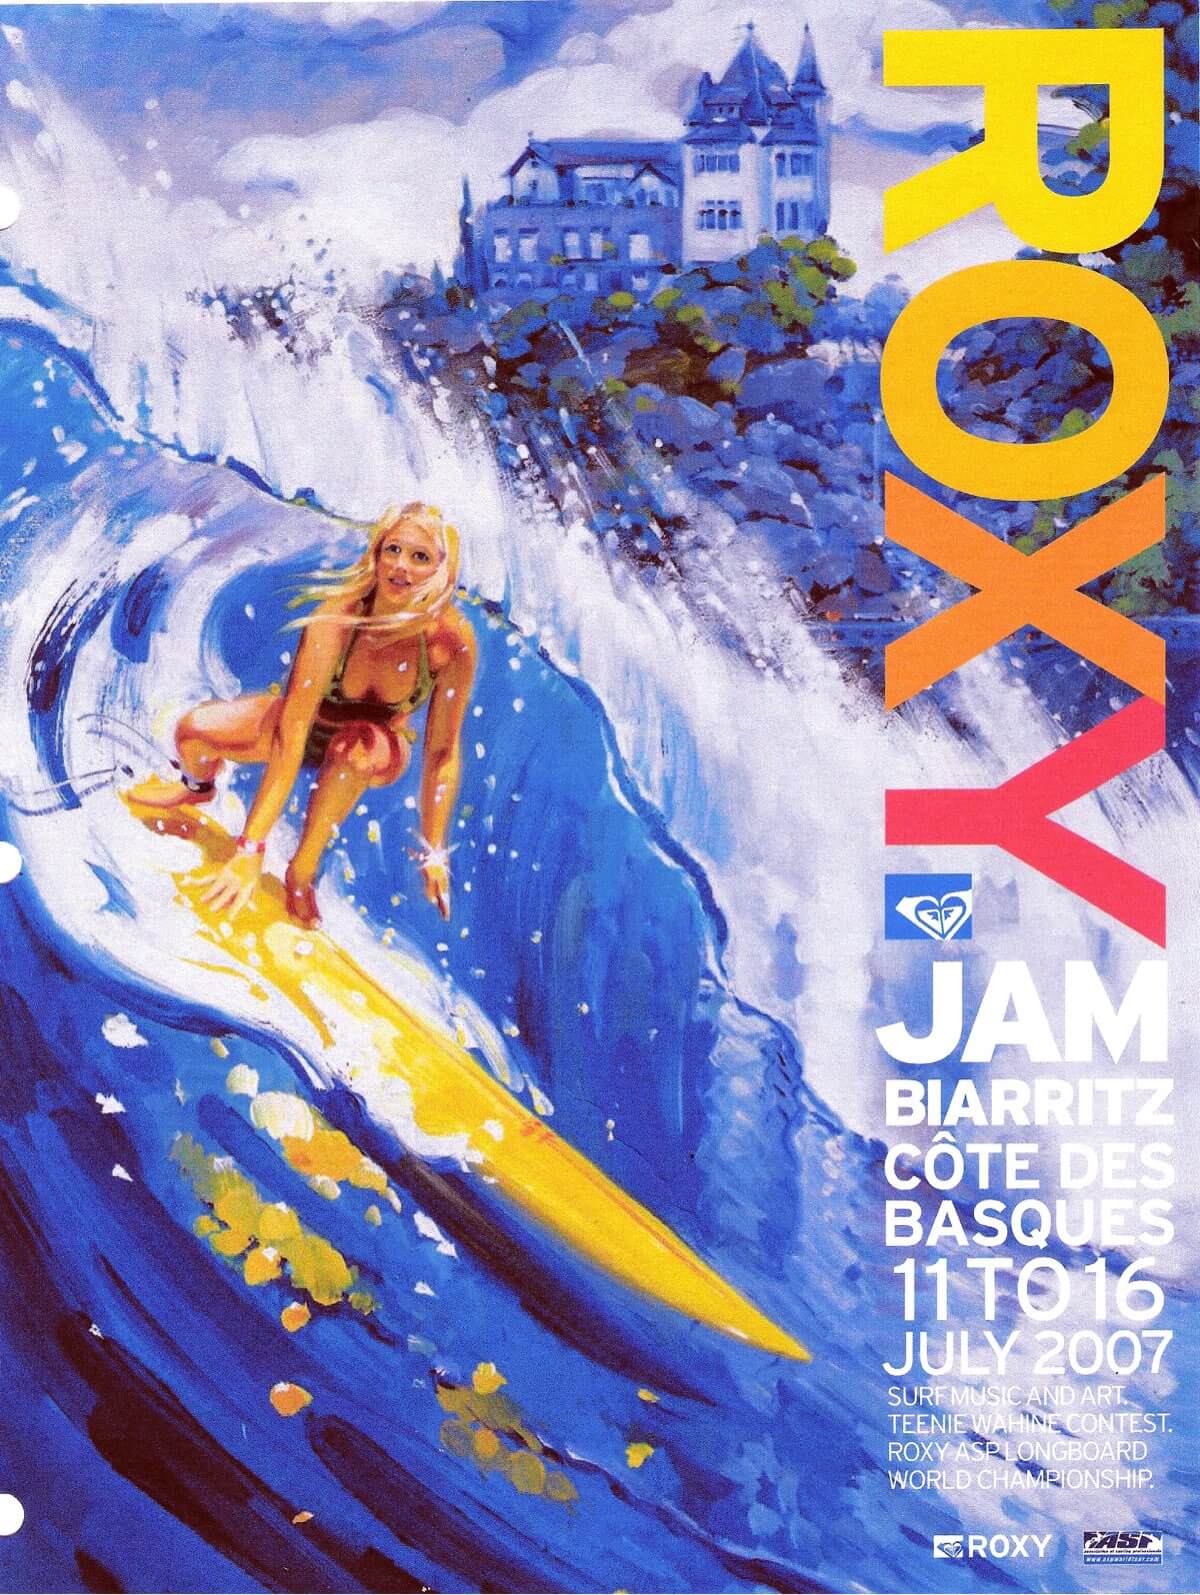 2007 Roxy Jam Biarritz poster